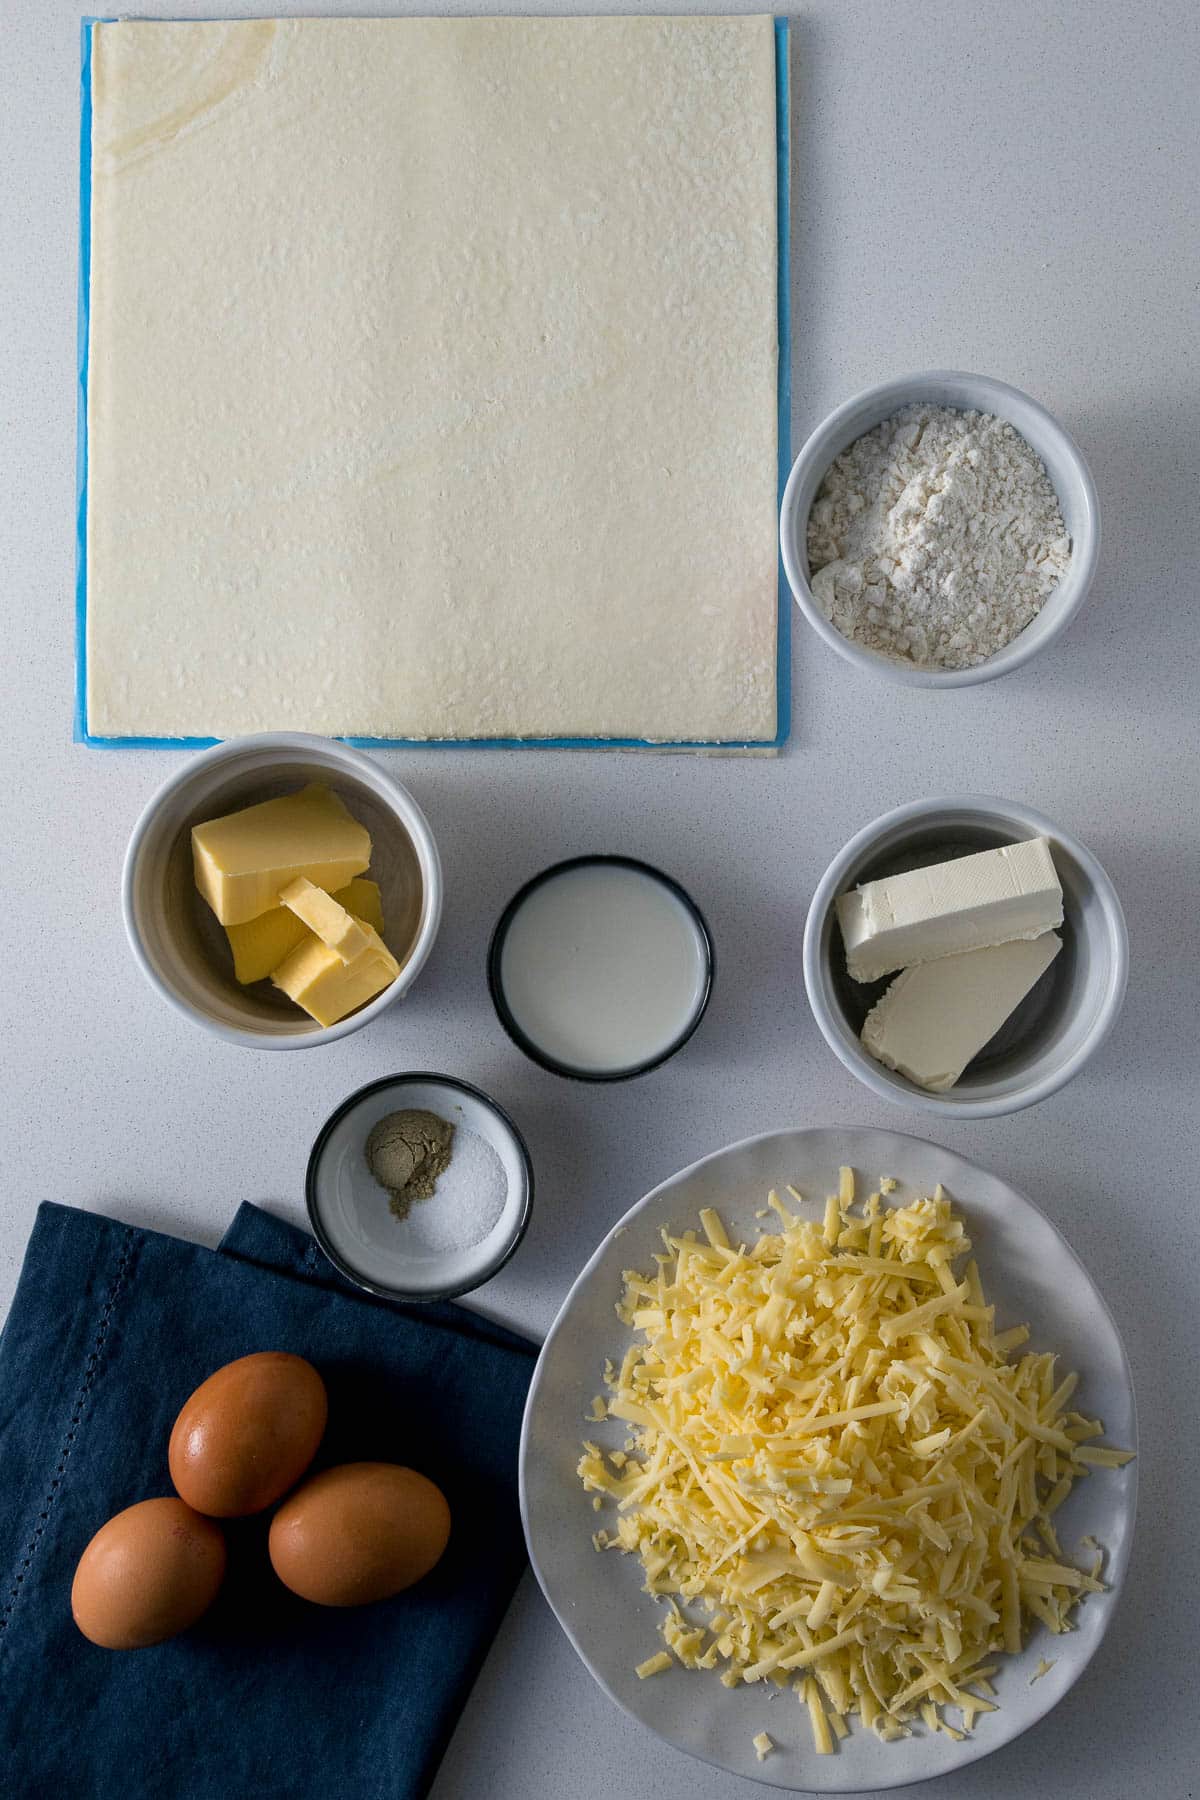 Mini cheese rolls ingredients.